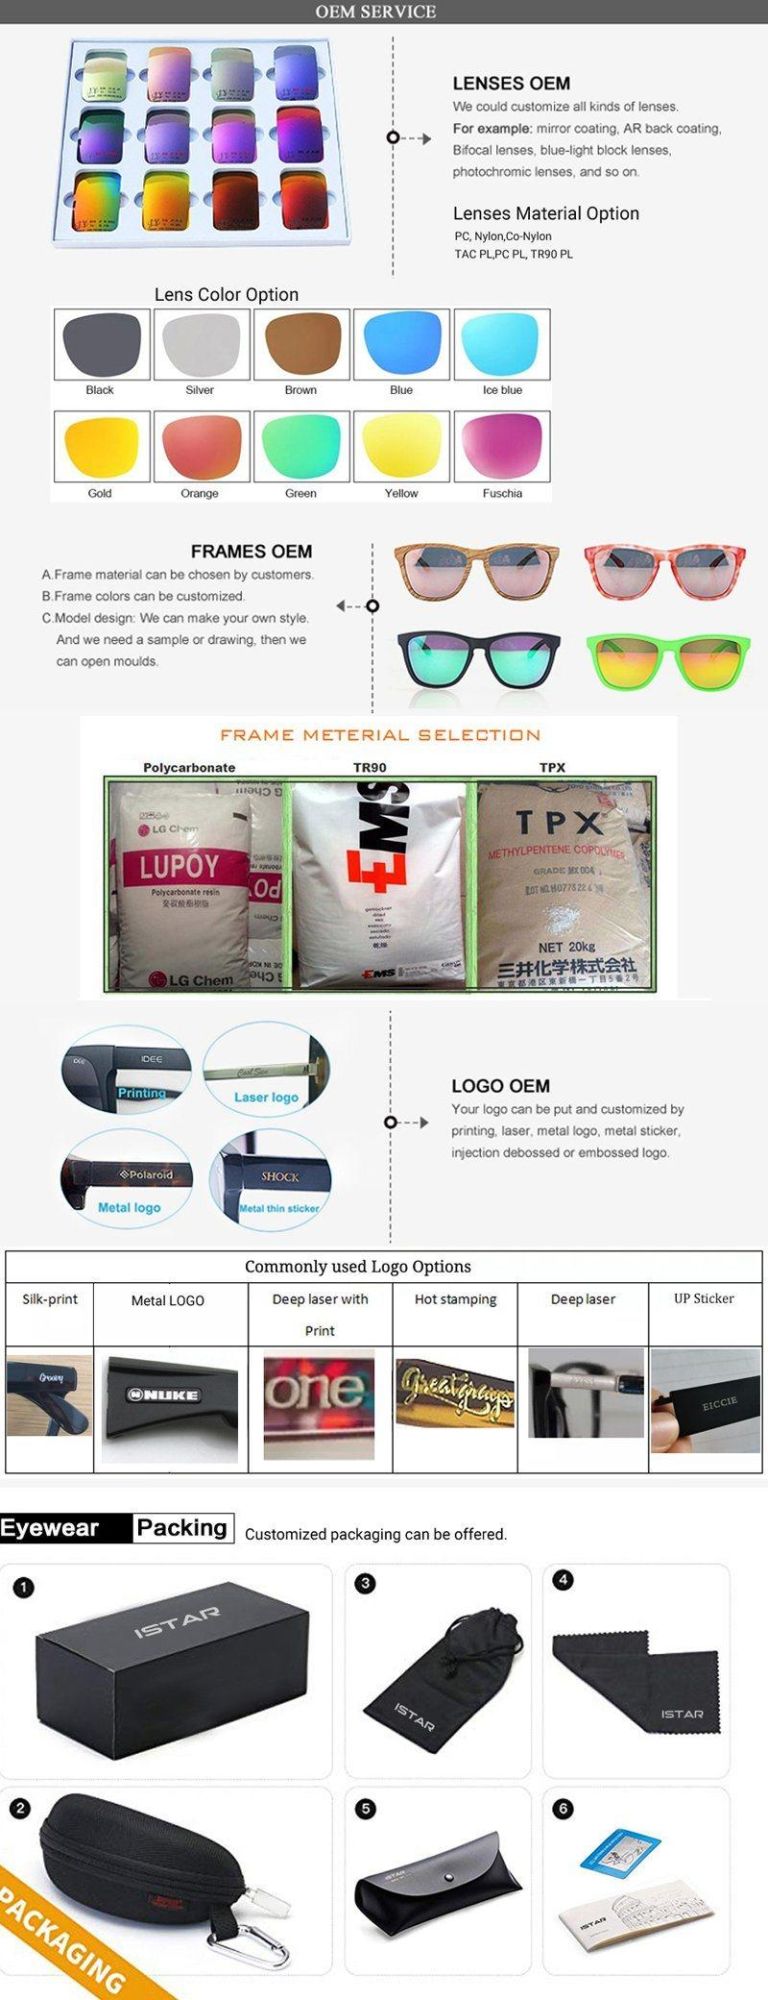 Xiamen Manufacturer Fashion CE UV400 Mirror Polarized Unisex Plastic Sunglasses